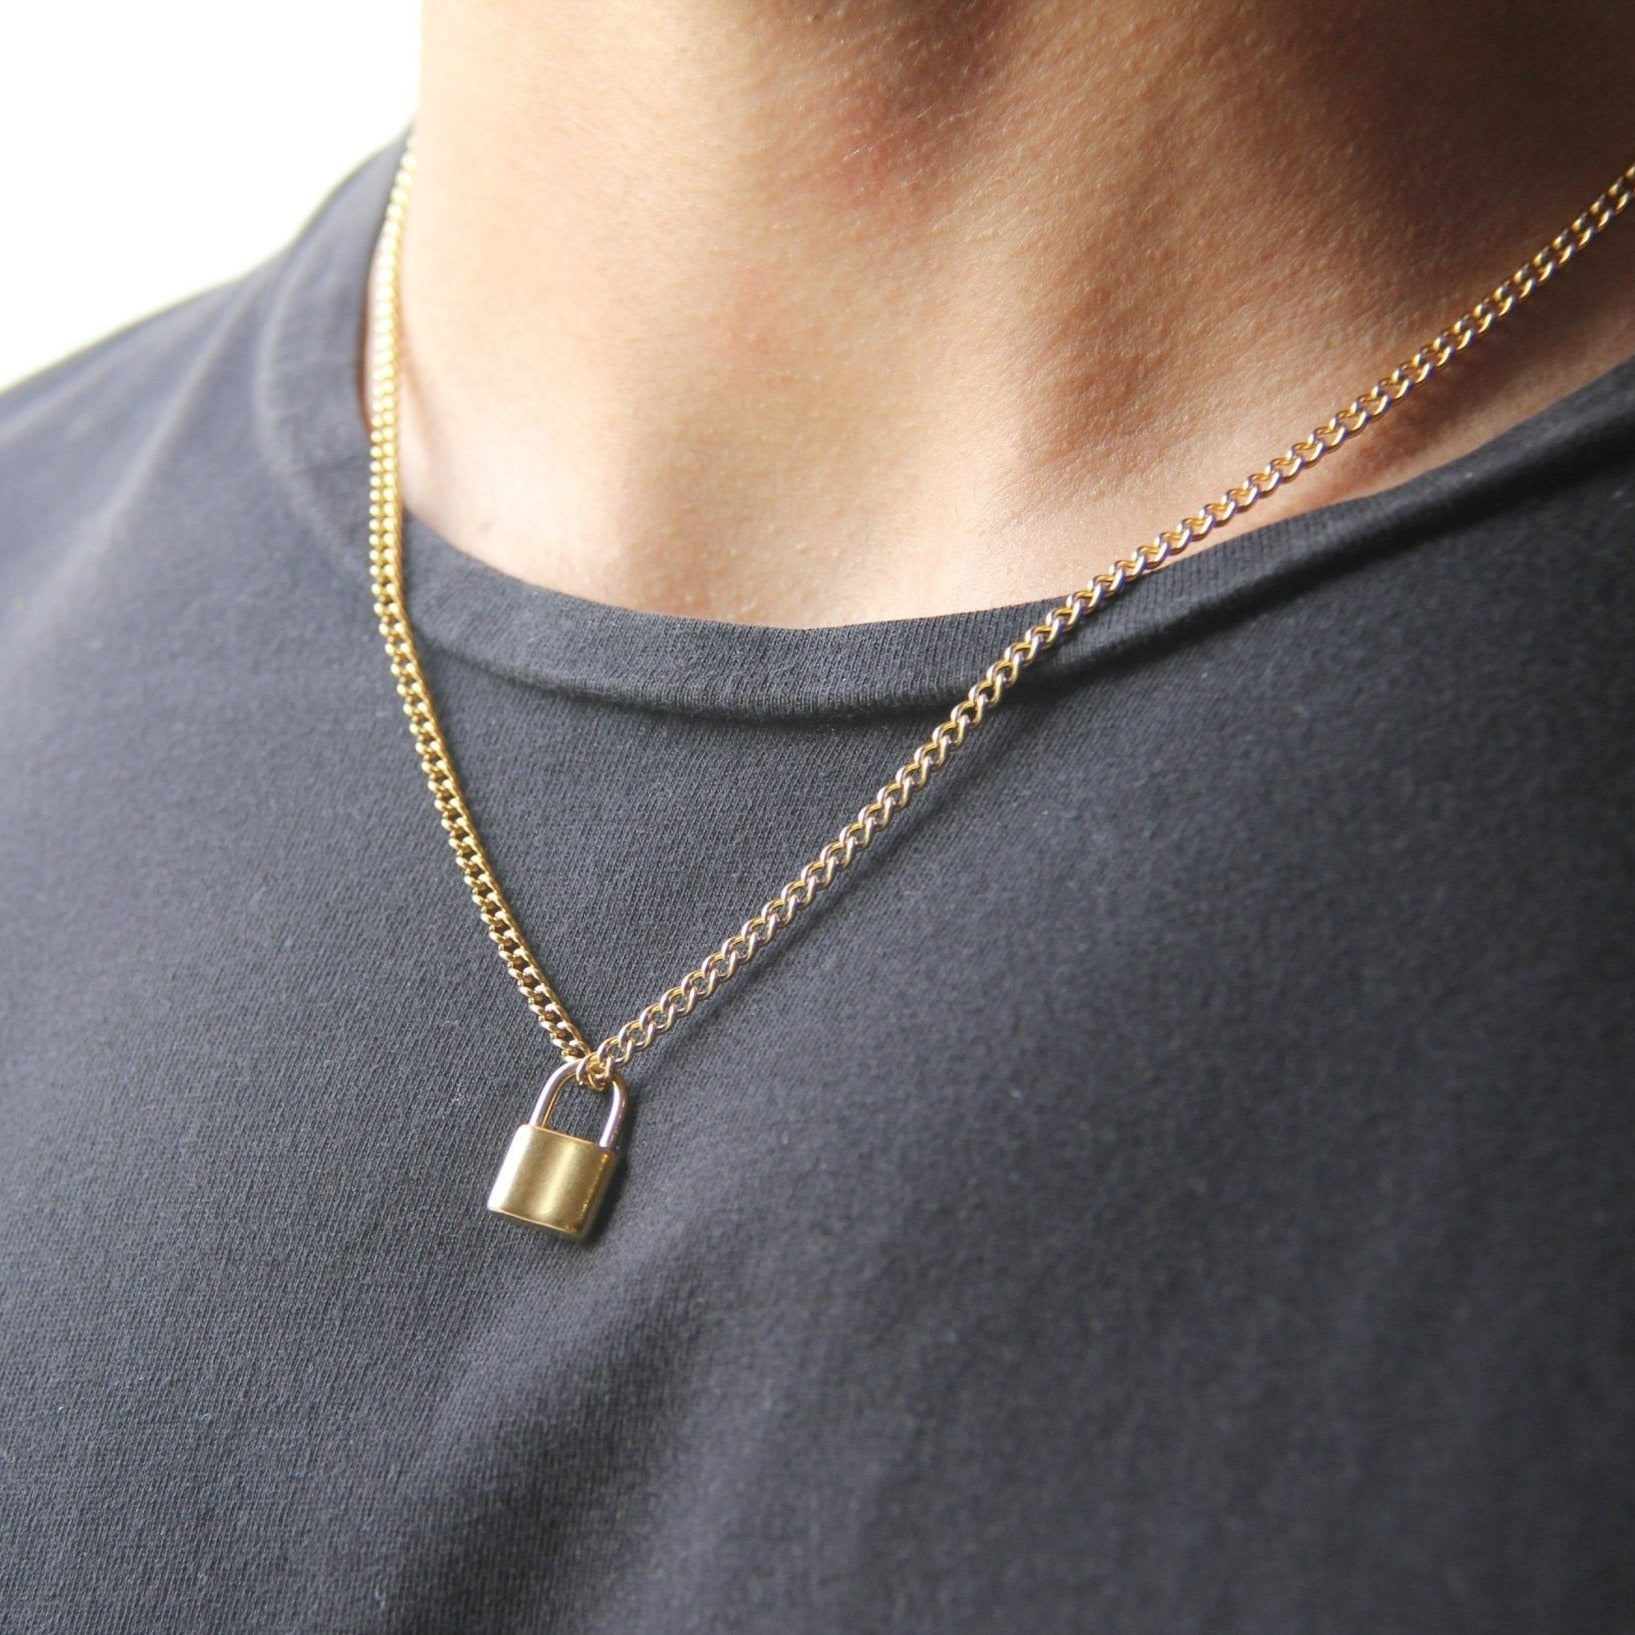 Carlton London Gold-Plated CZ-Studded Lock-Shaped Necklace FJN3363 –  Carlton London Online